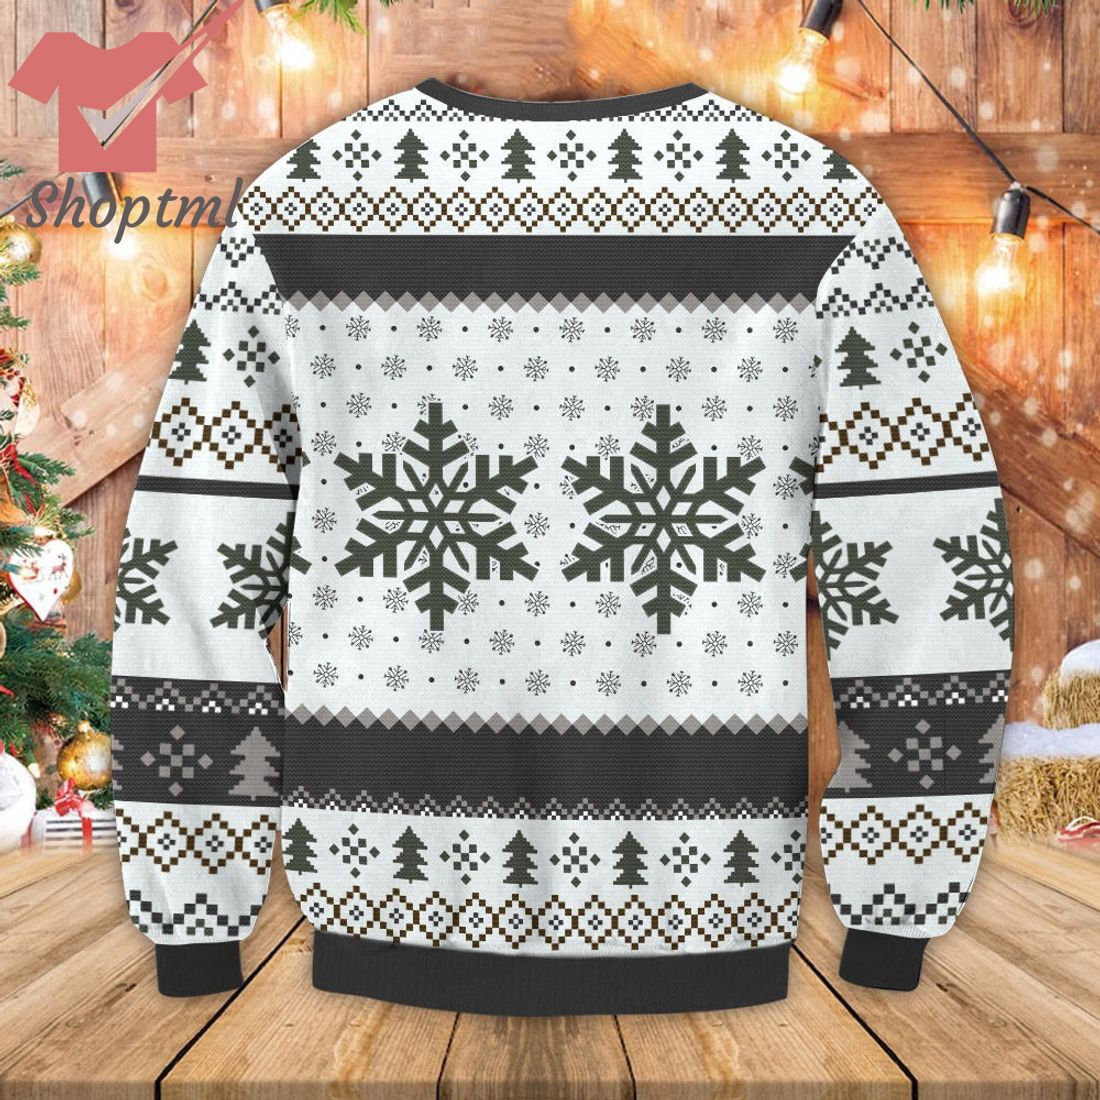 Jeffrey Dahmer If You Can't Beat 'Em Eat 'Em Ugly Christmas Sweater